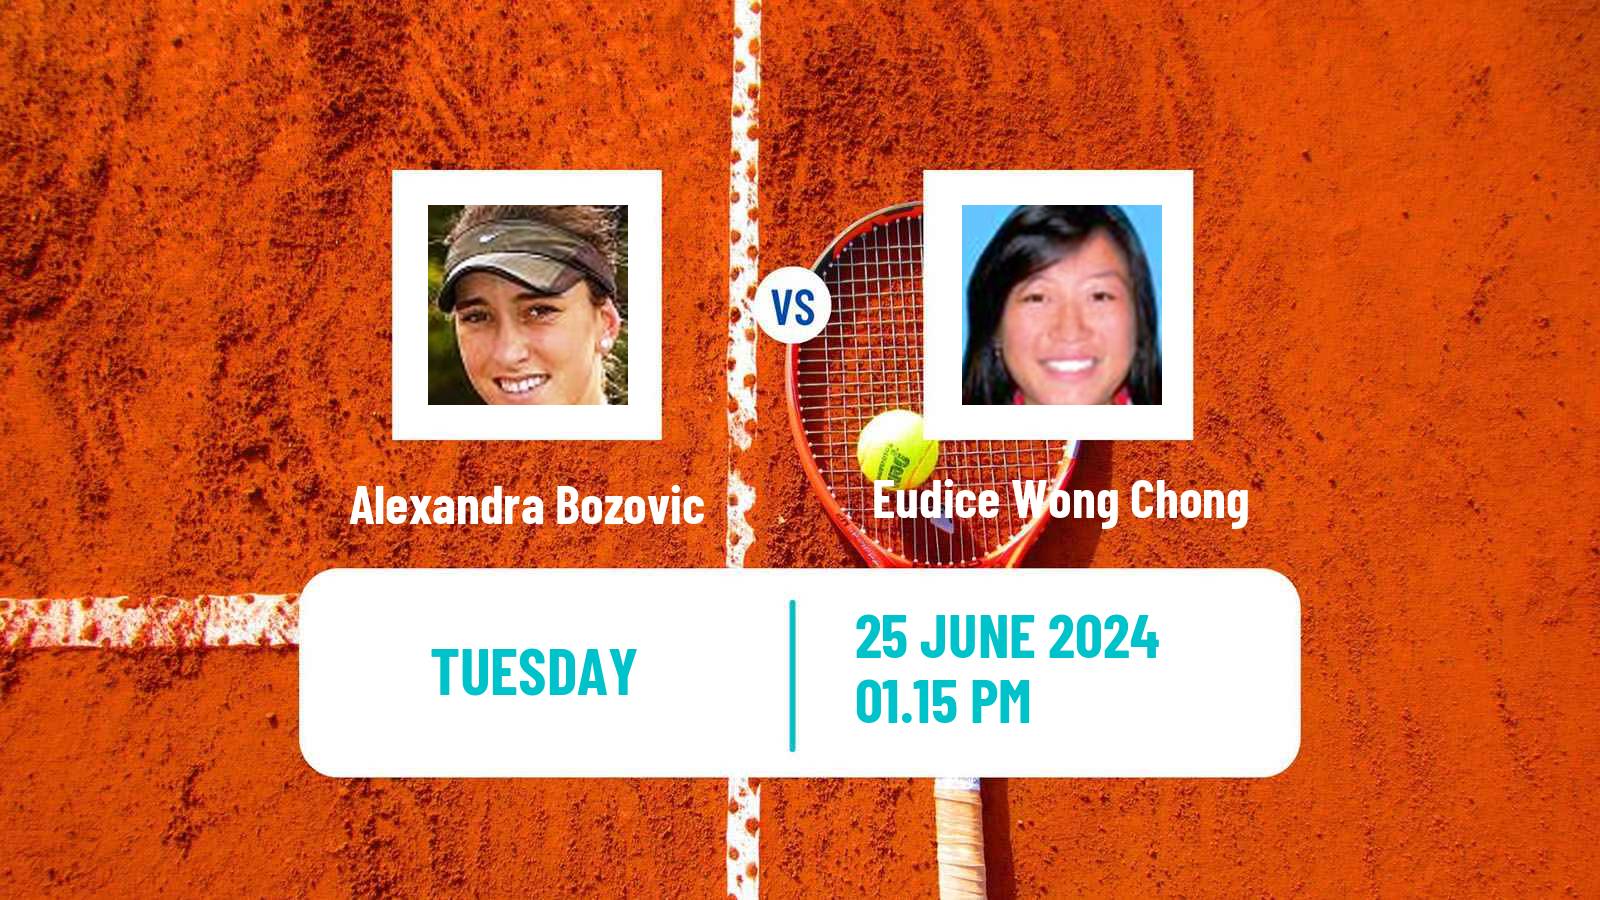 Tennis ITF W50 Palma Del Rio Women Alexandra Bozovic - Eudice Wong Chong